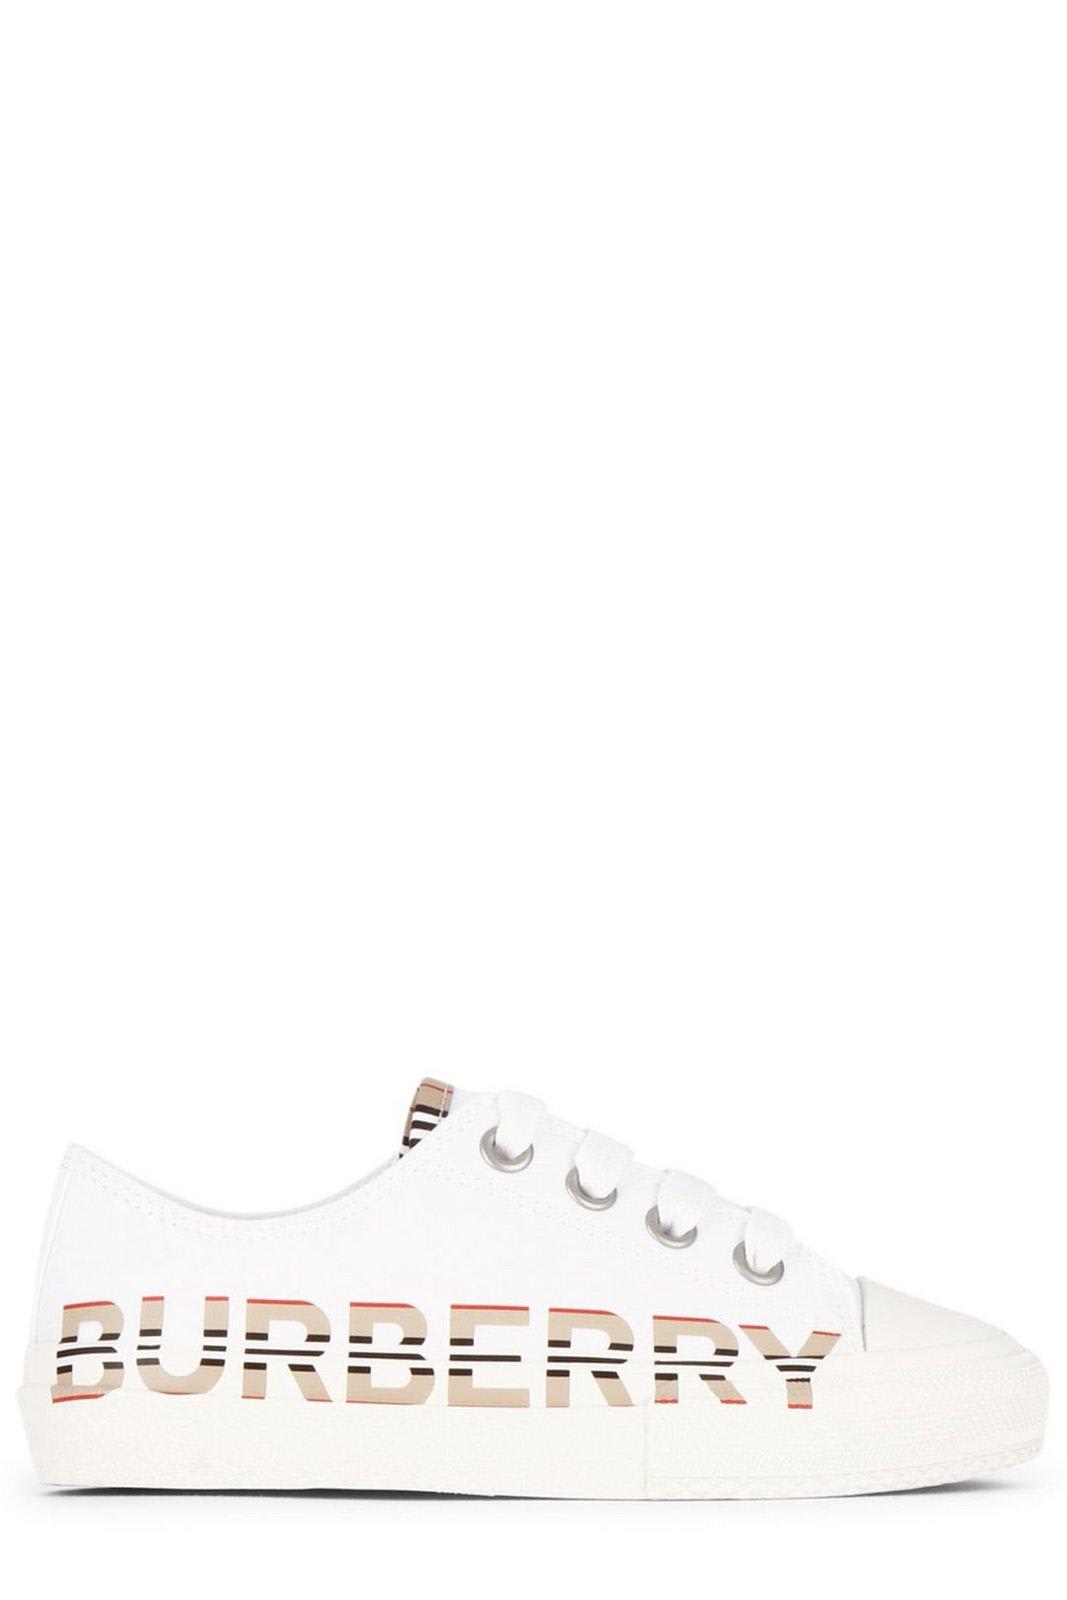 Burberry Icon Stripe Sneakers